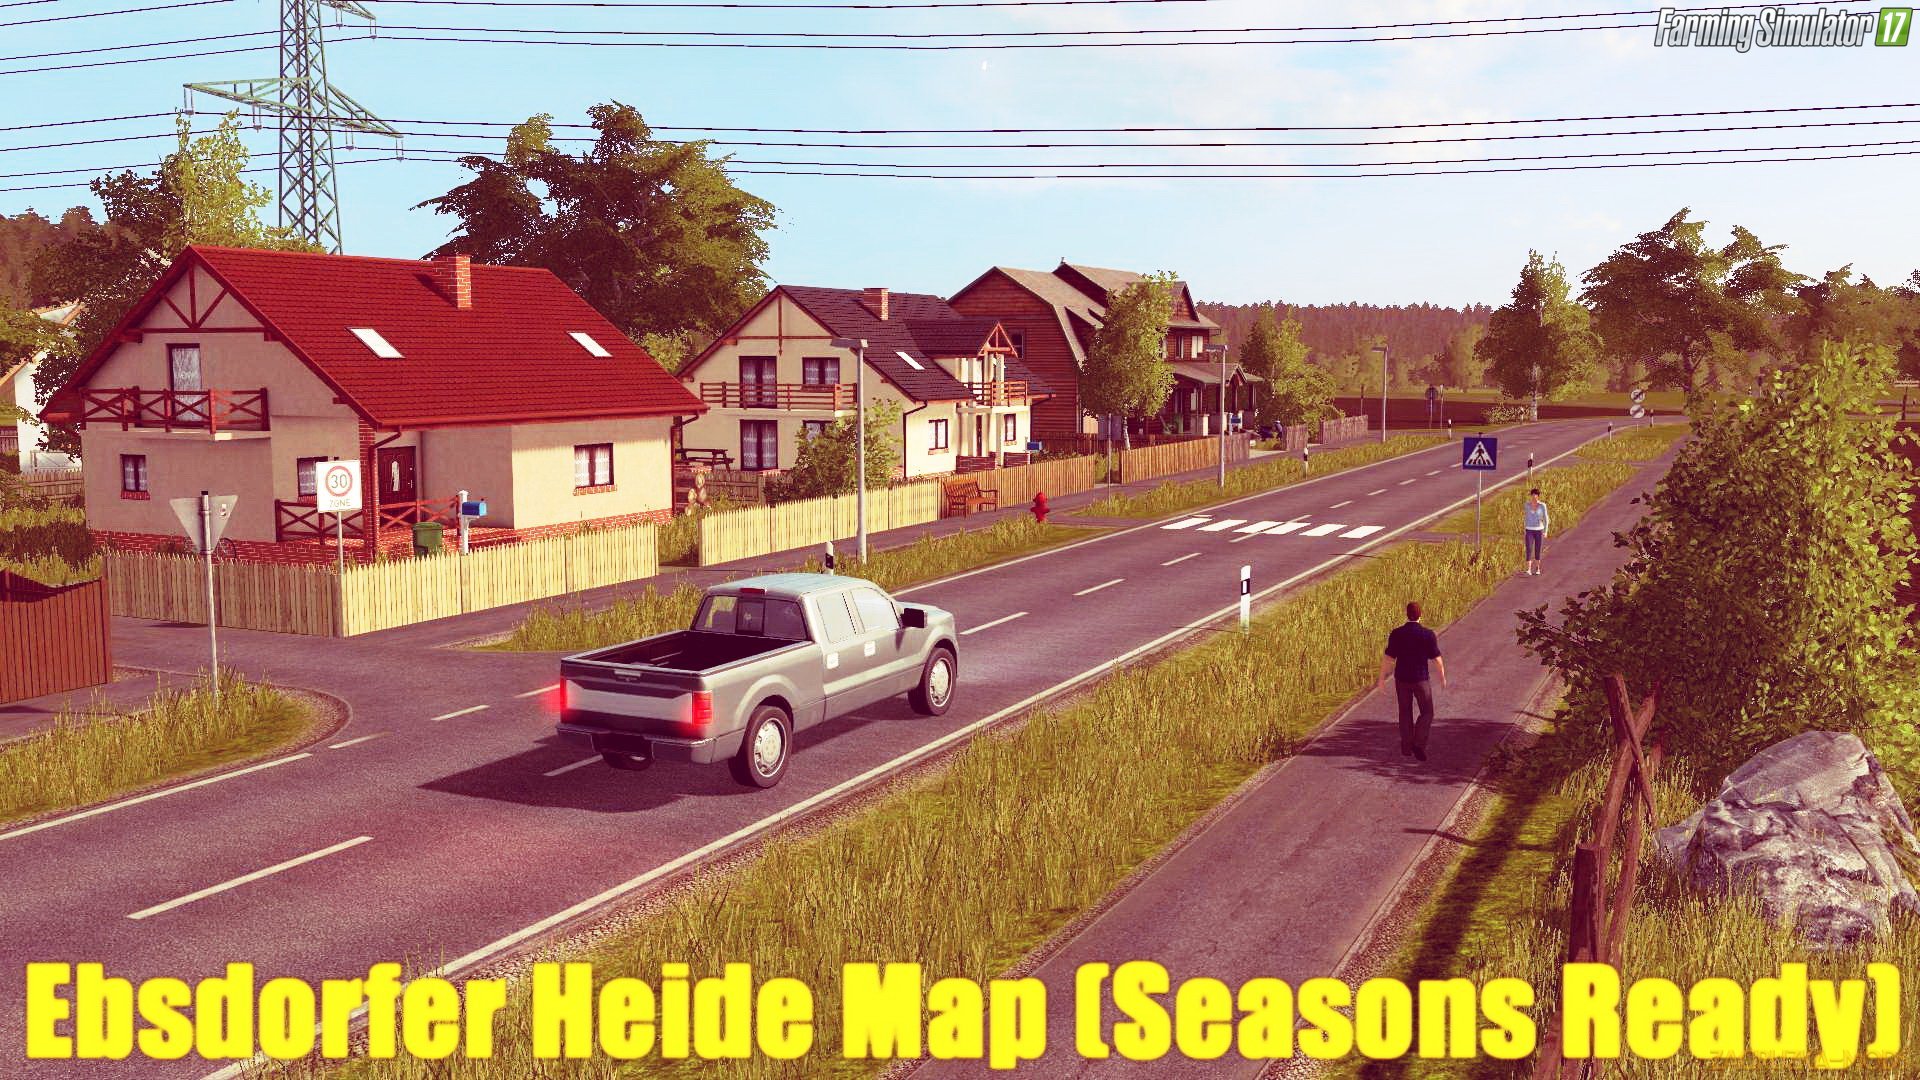 Ebsdorfer Heide Map (Seasons Ready) v2.0 for FS 17